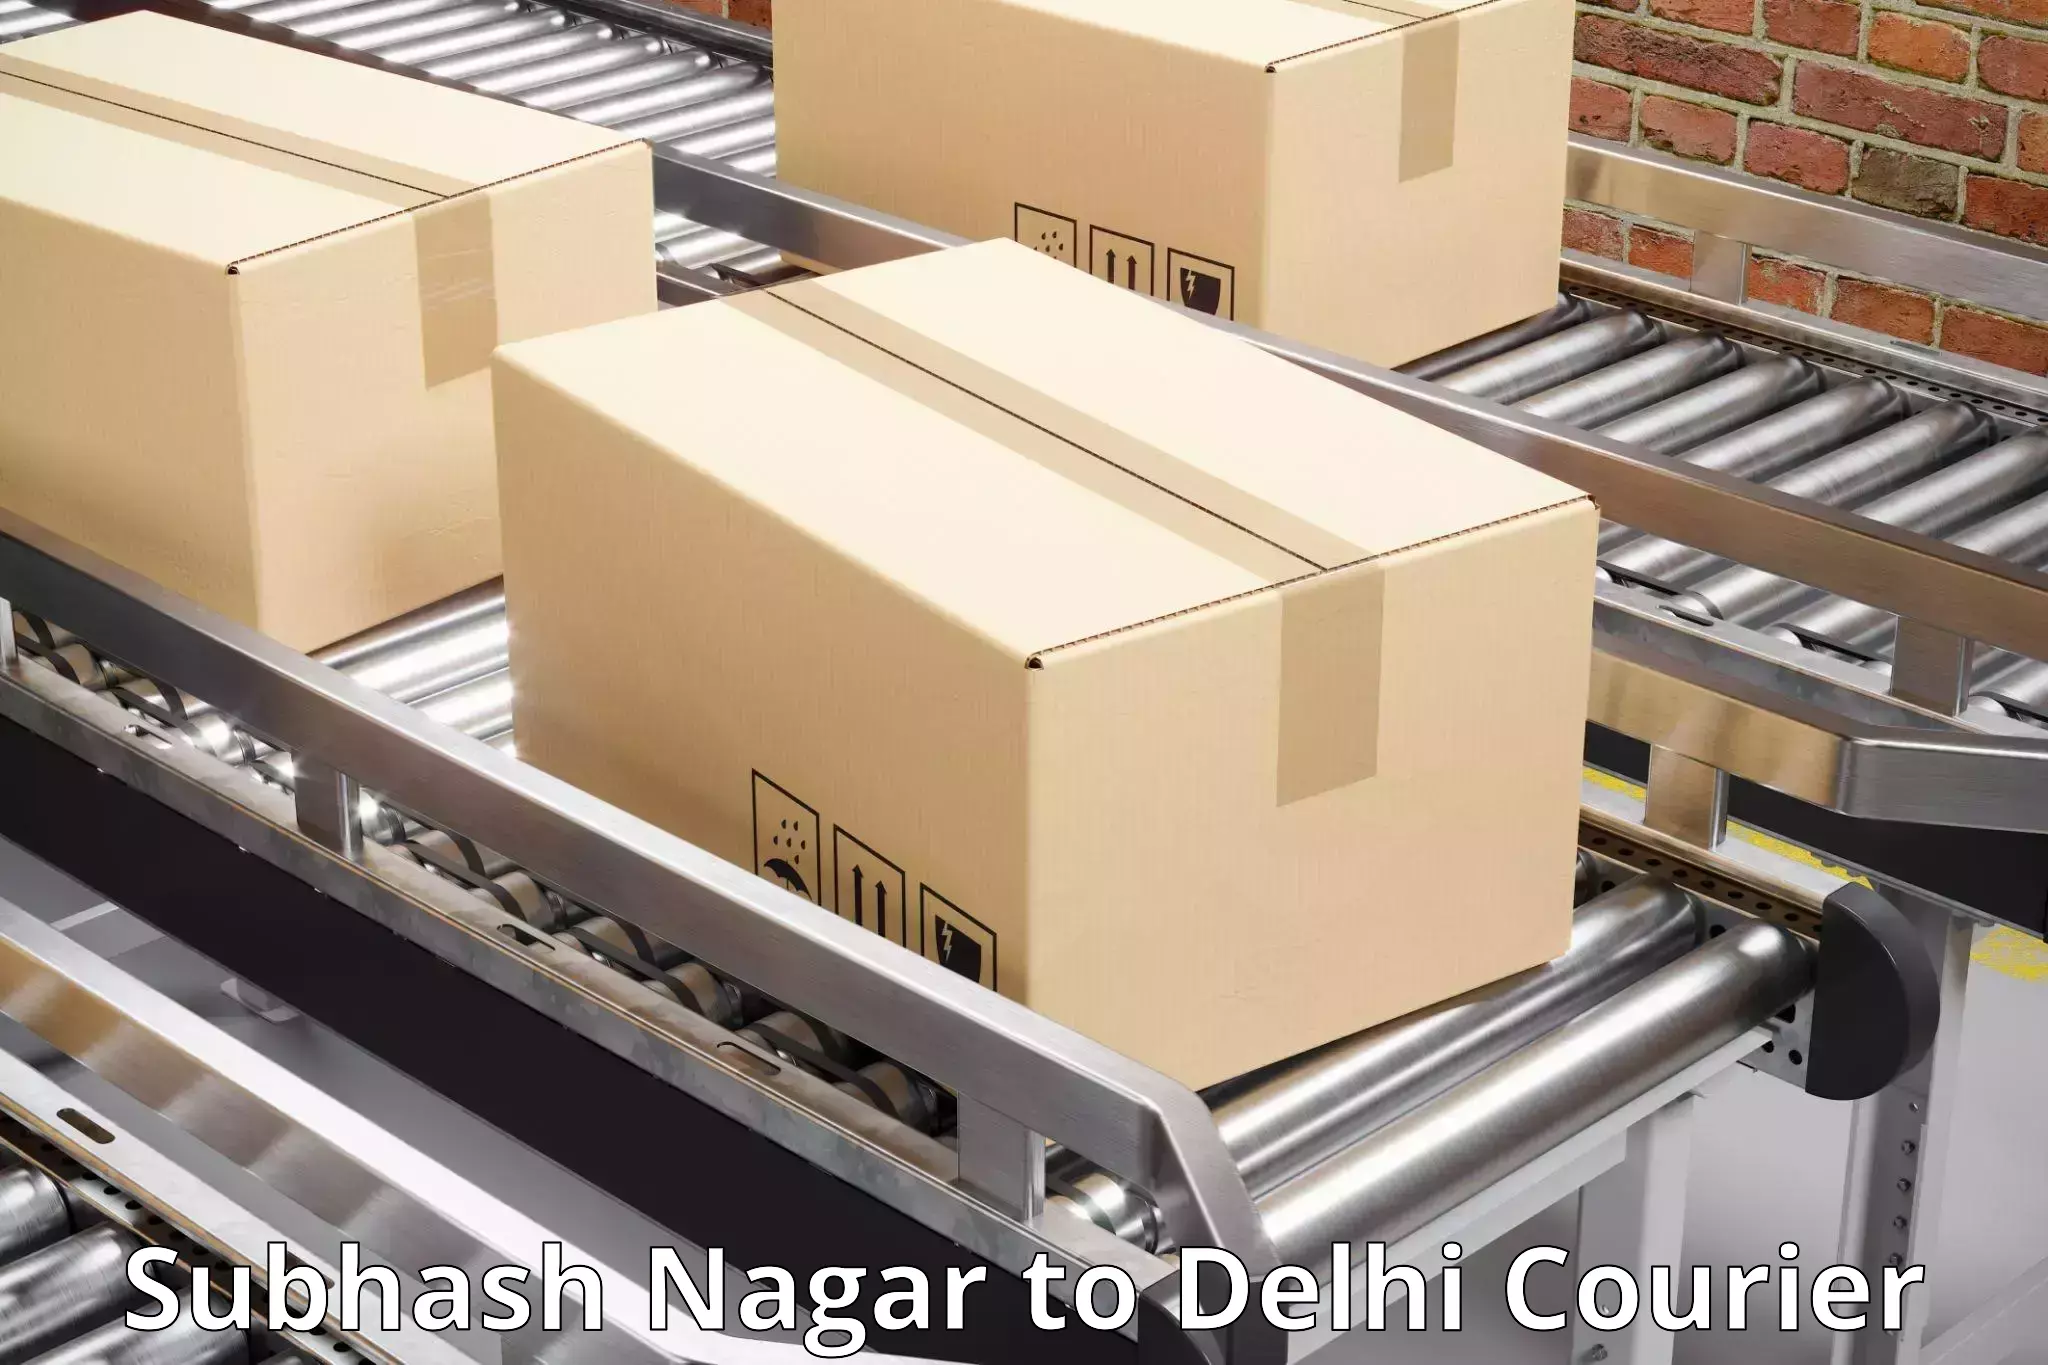 24-hour courier service Subhash Nagar to NCR